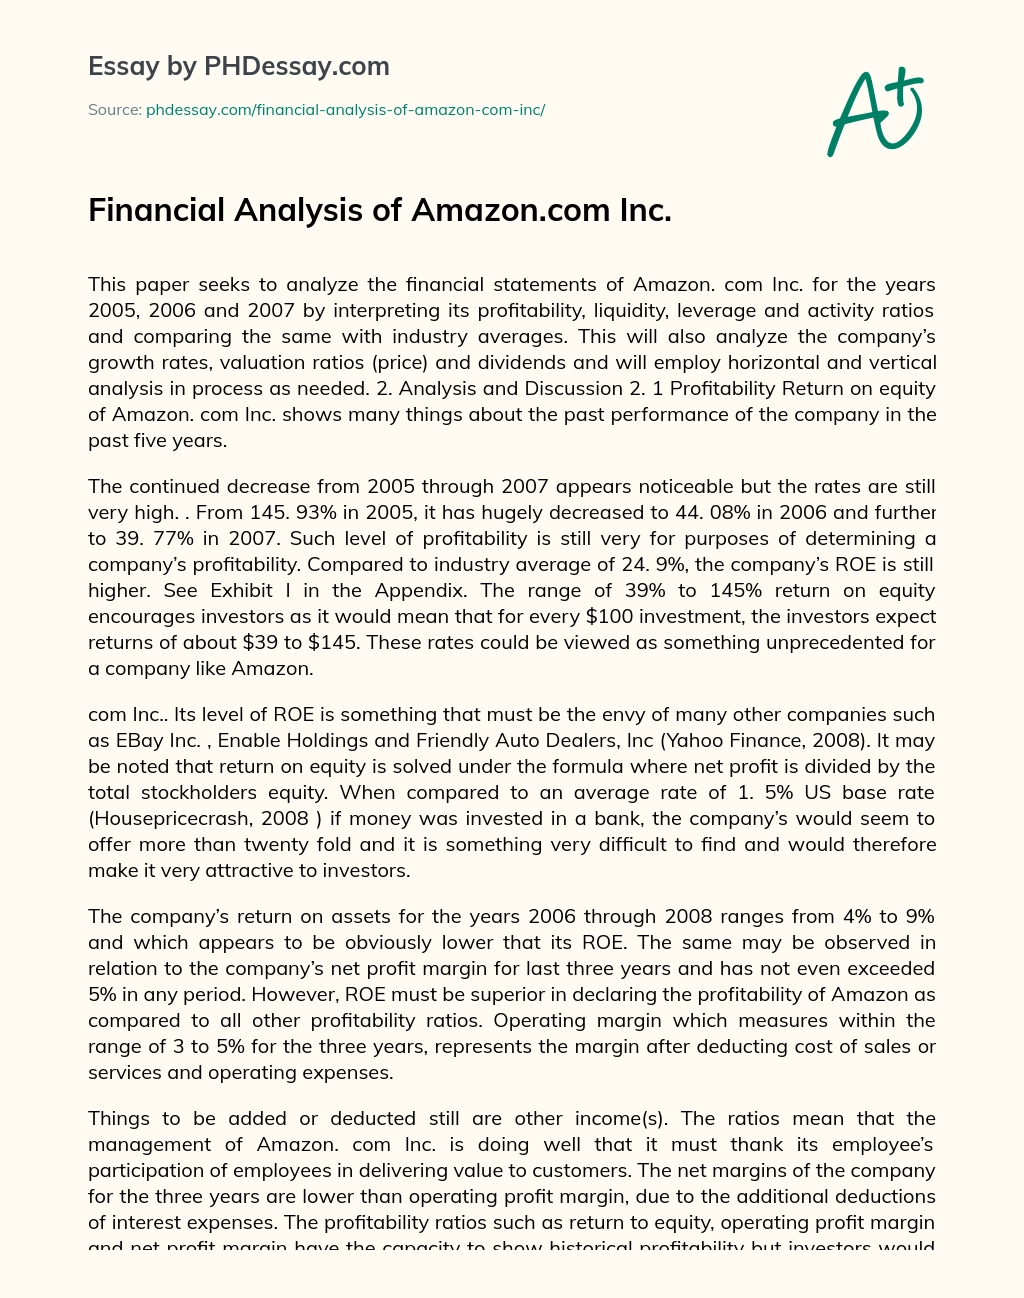 Financial Analysis of Amazon.com Inc. essay